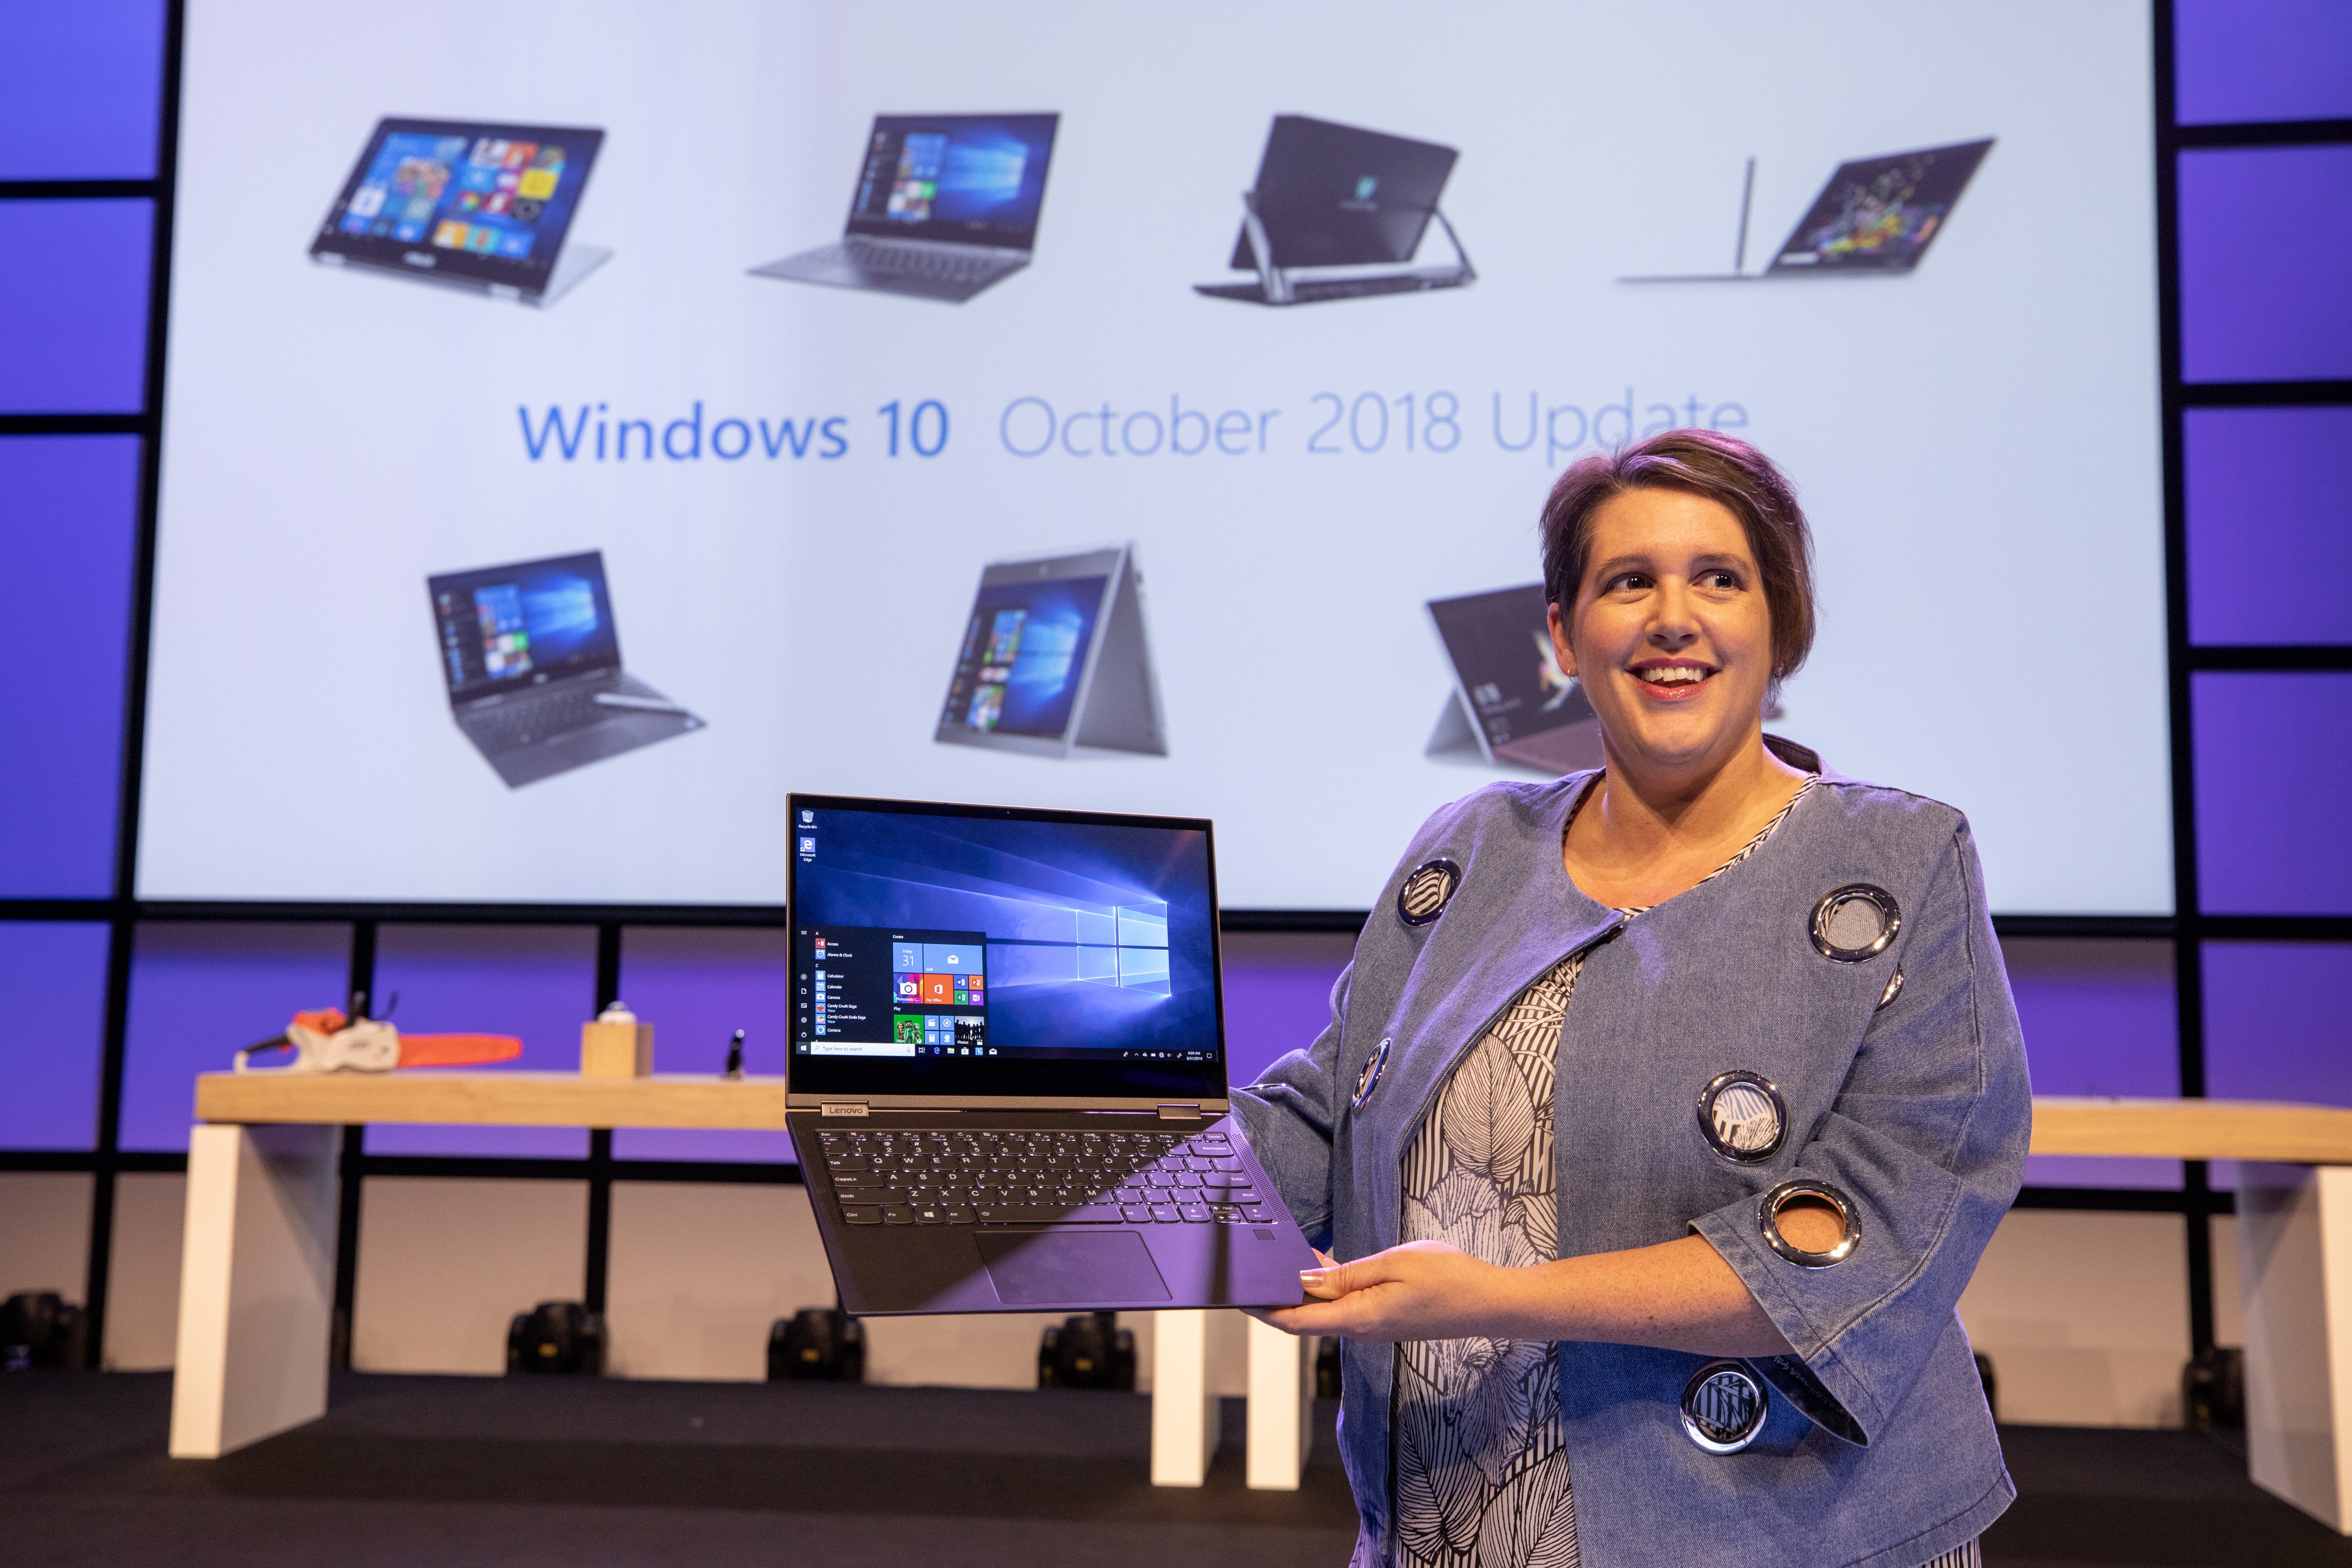 Erin Chapple, corporate vice president, Microsoft, speaking at the IFA 2018 keynote in Berlin